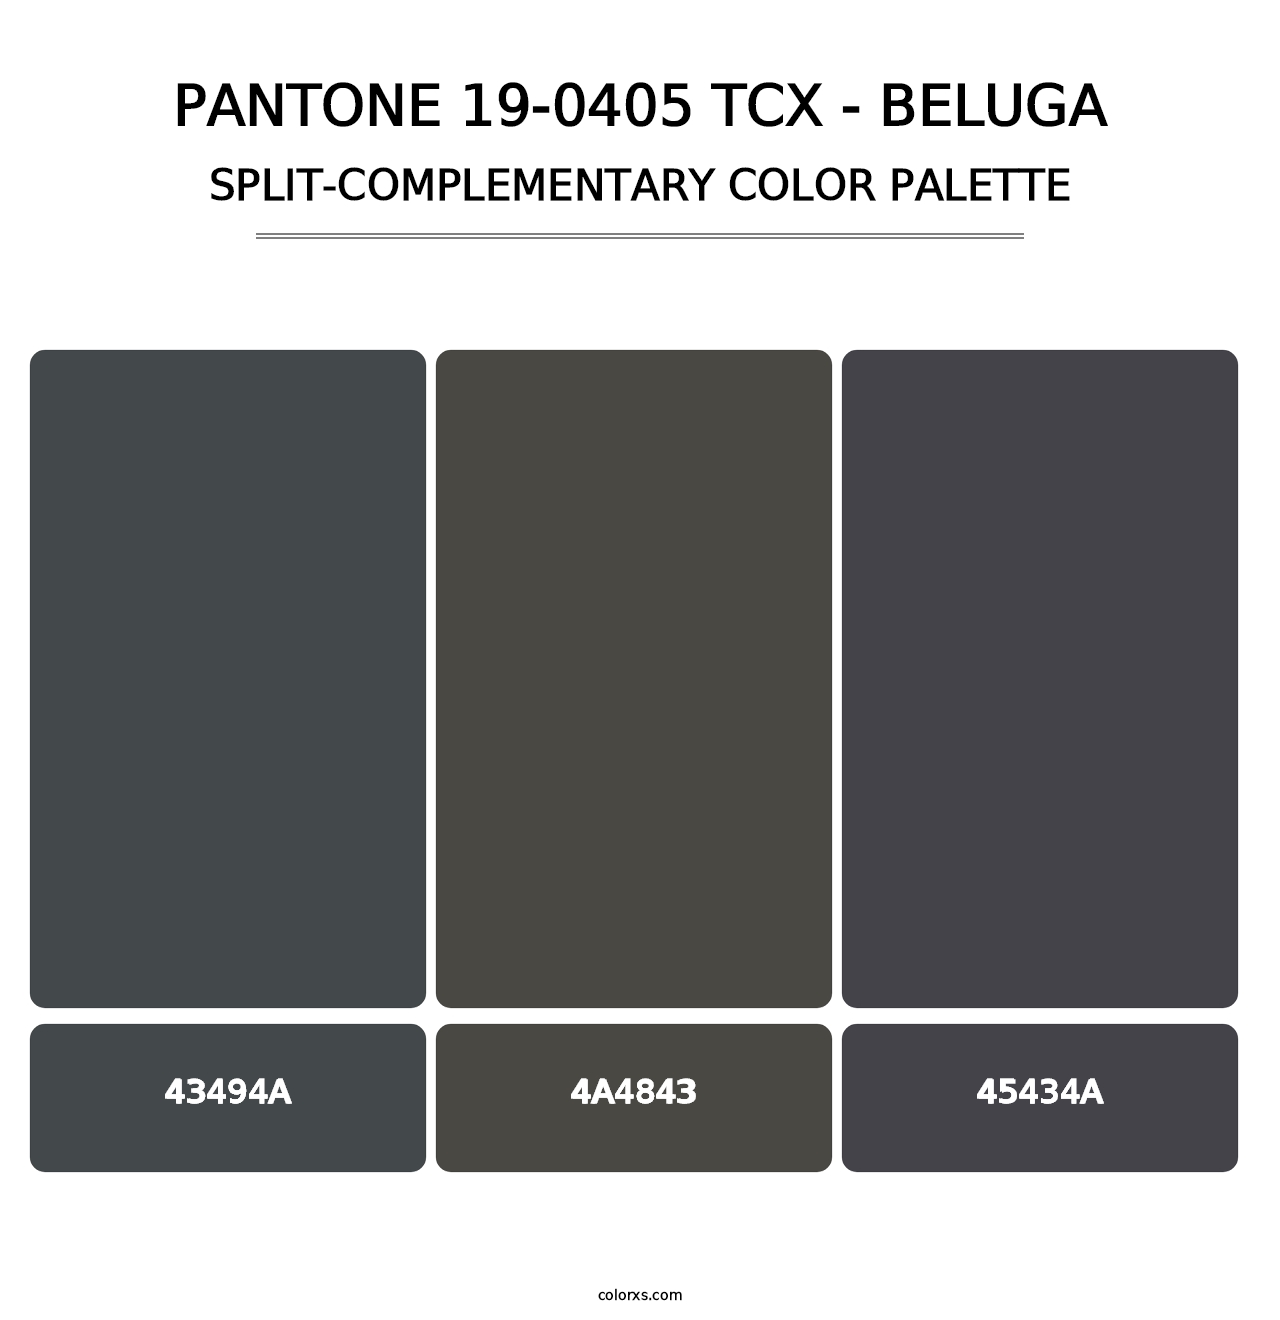 PANTONE 19-0405 TCX - Beluga - Split-Complementary Color Palette